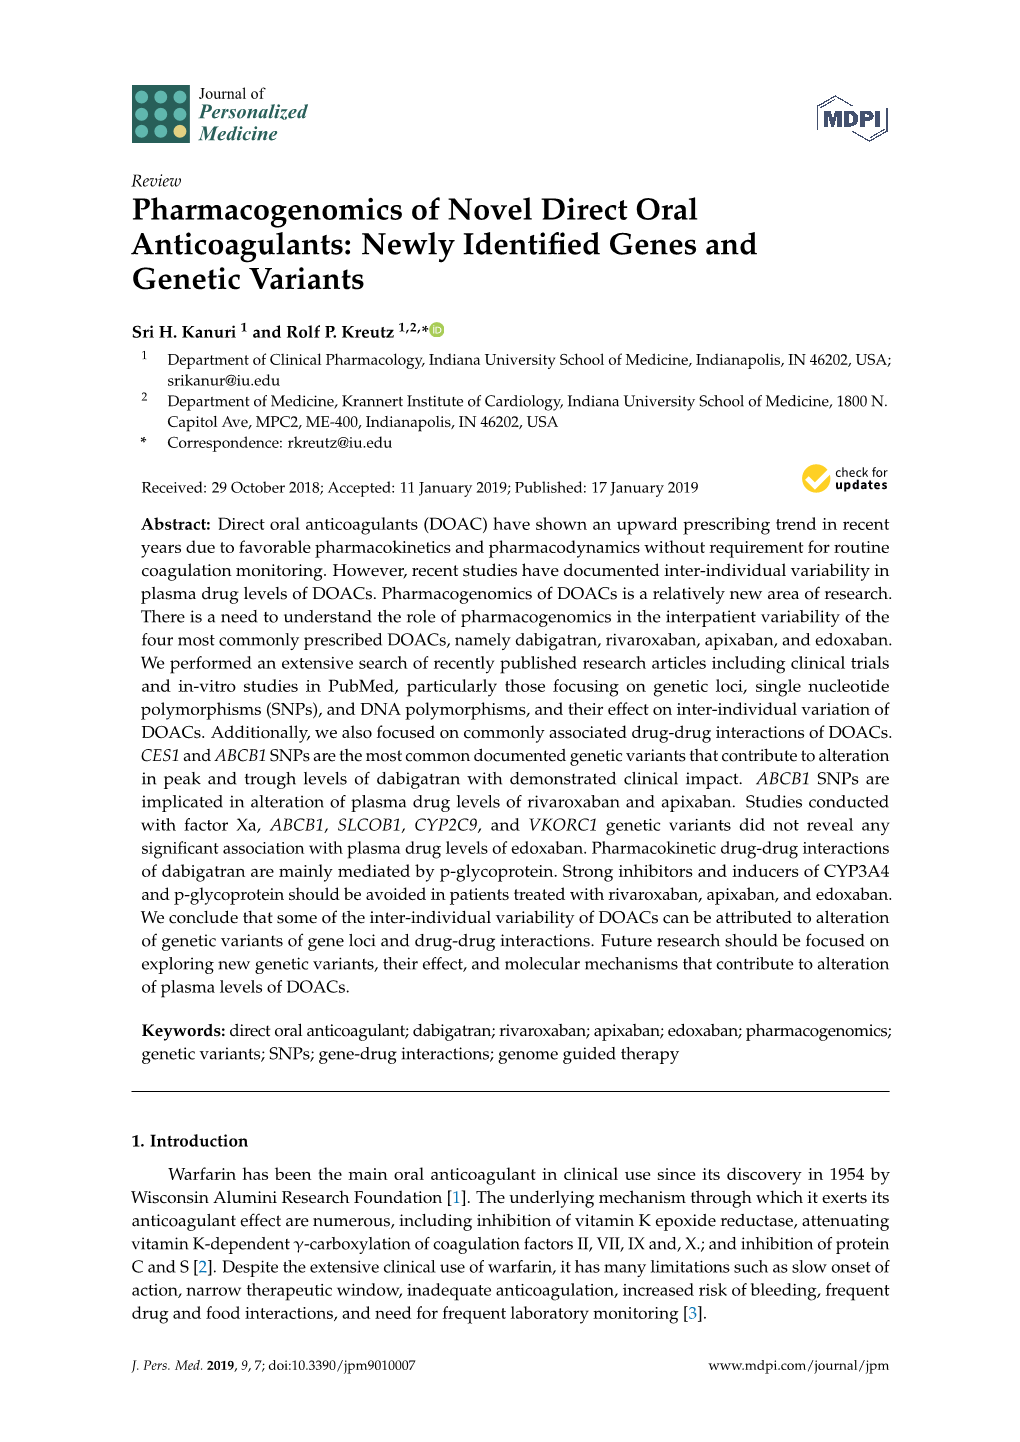 Pharmacogenomics of Novel Direct Oral Anticoagulants: Newly Identiﬁed Genes and Genetic Variants